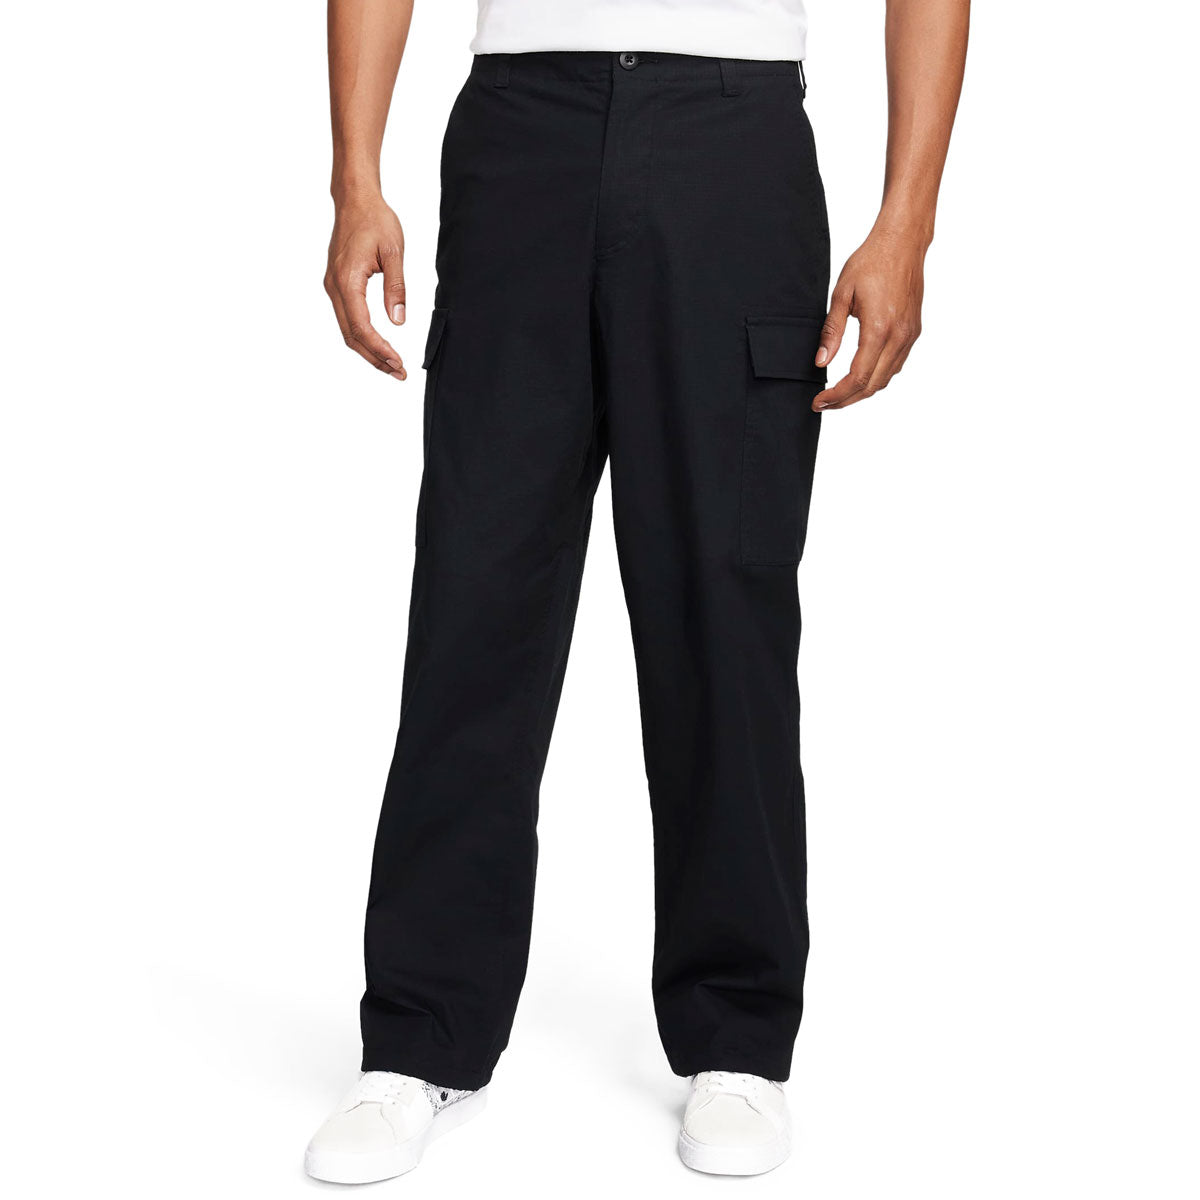 Nike SB Kearny Cargo Pants - Black image 1